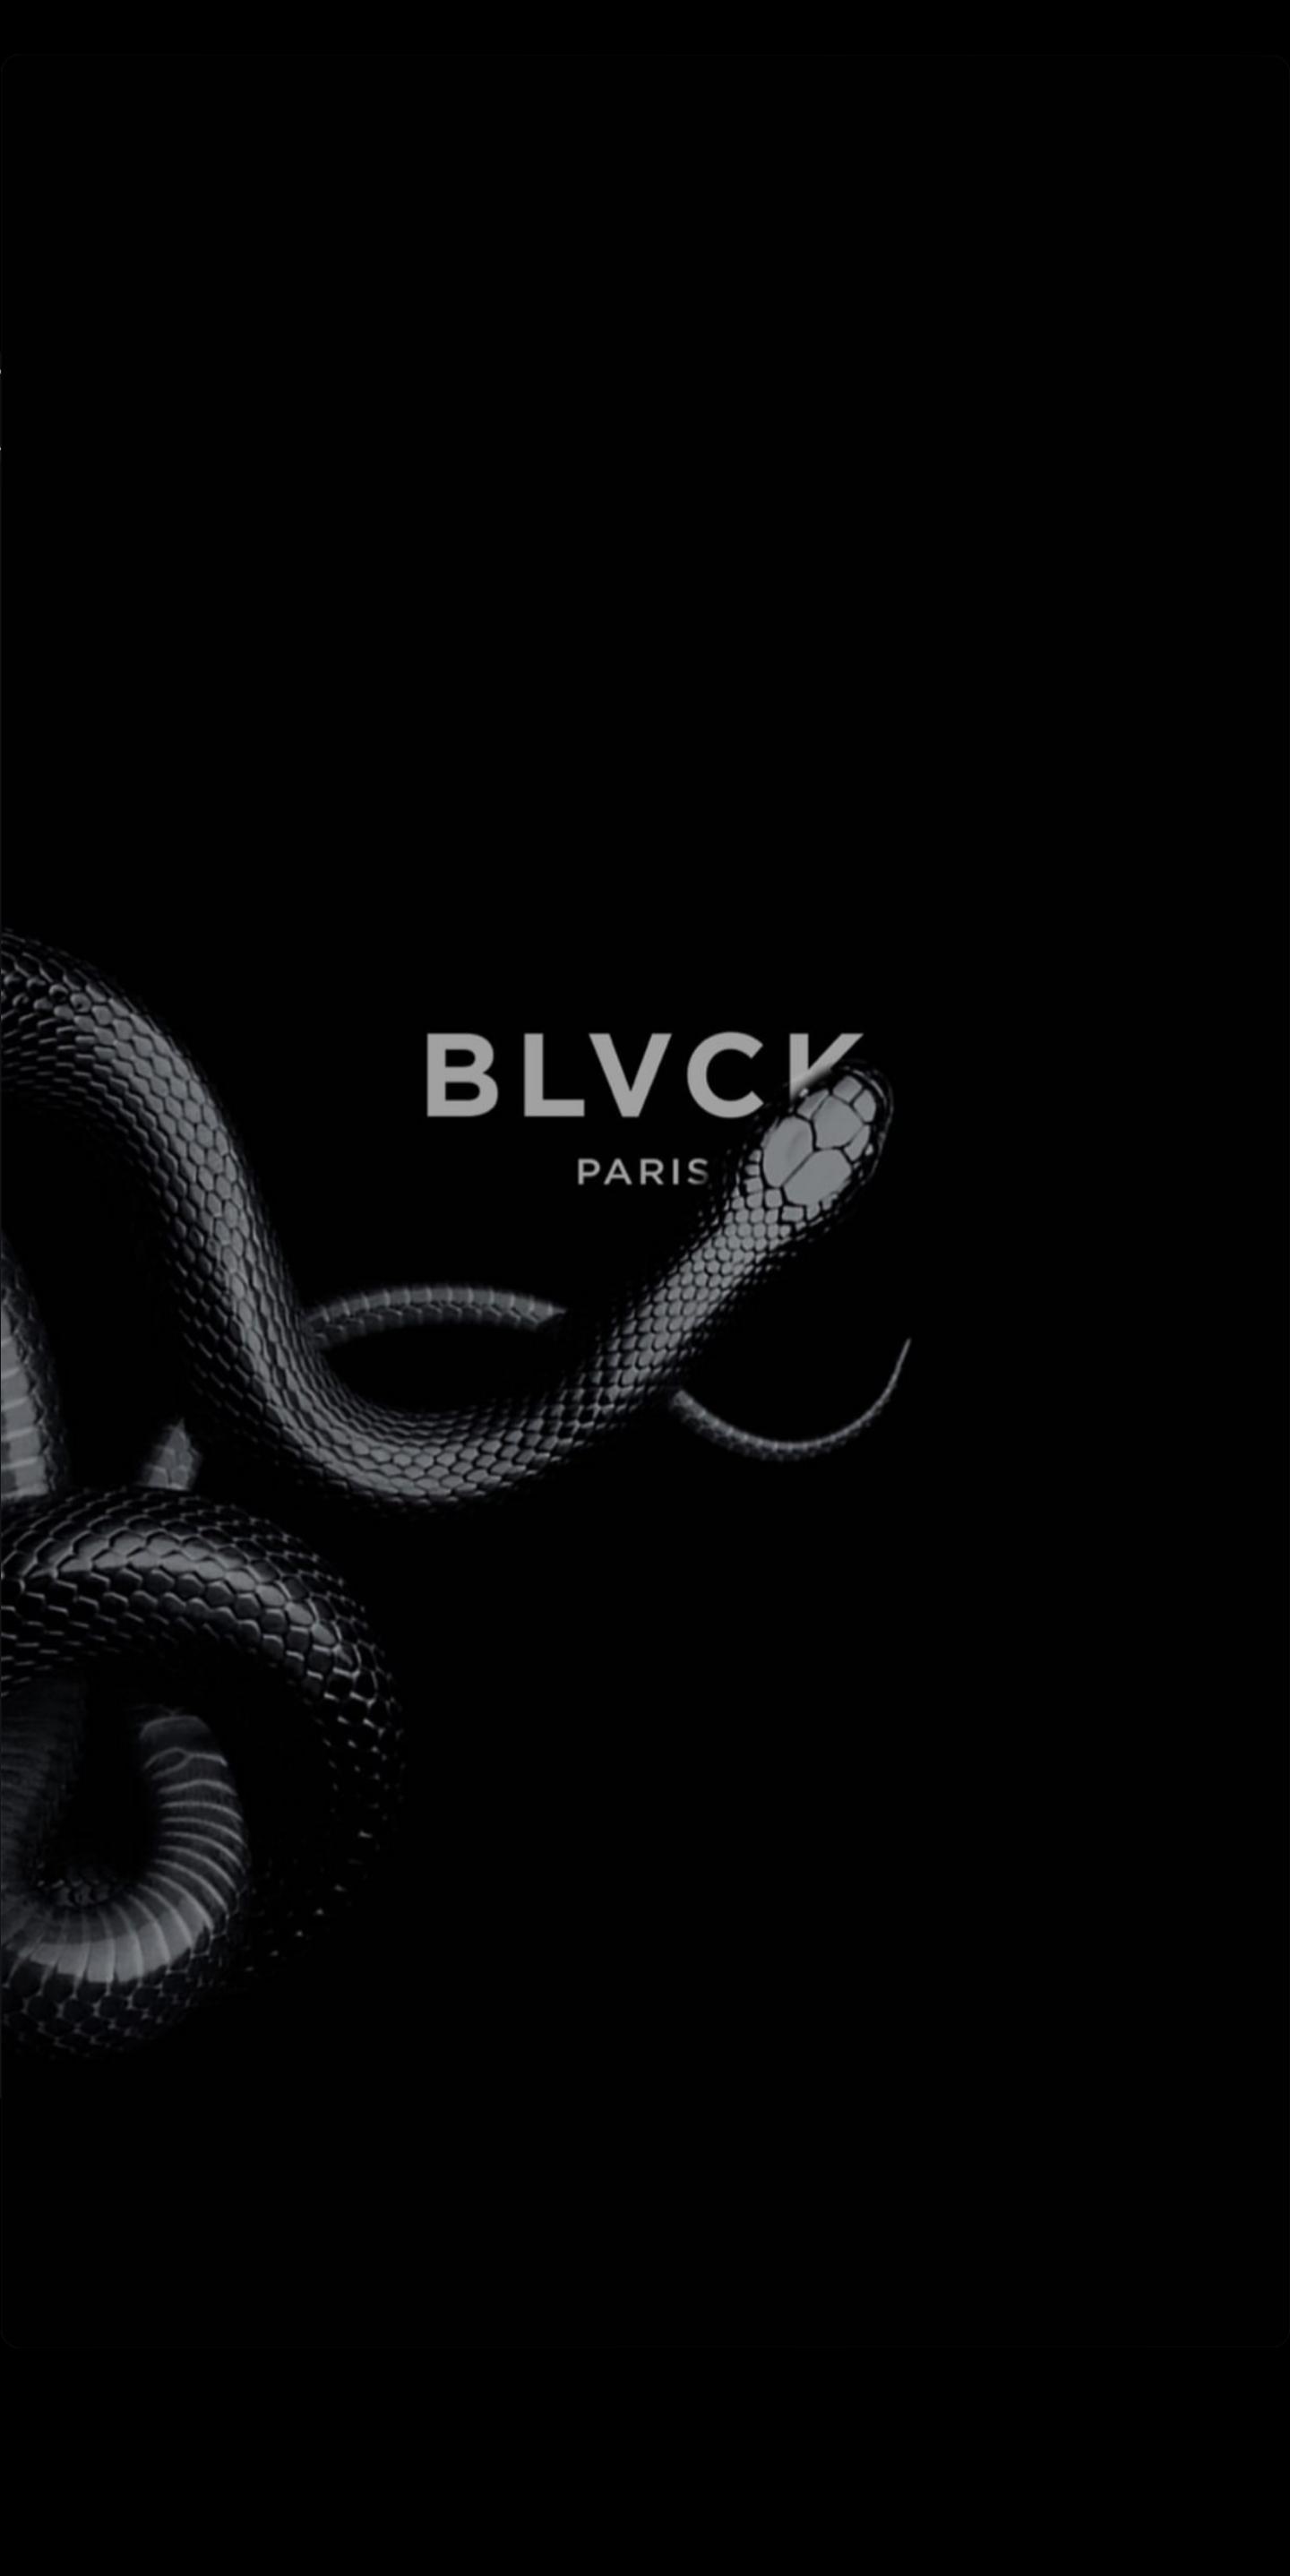 BLVCK Python (1440x2875)